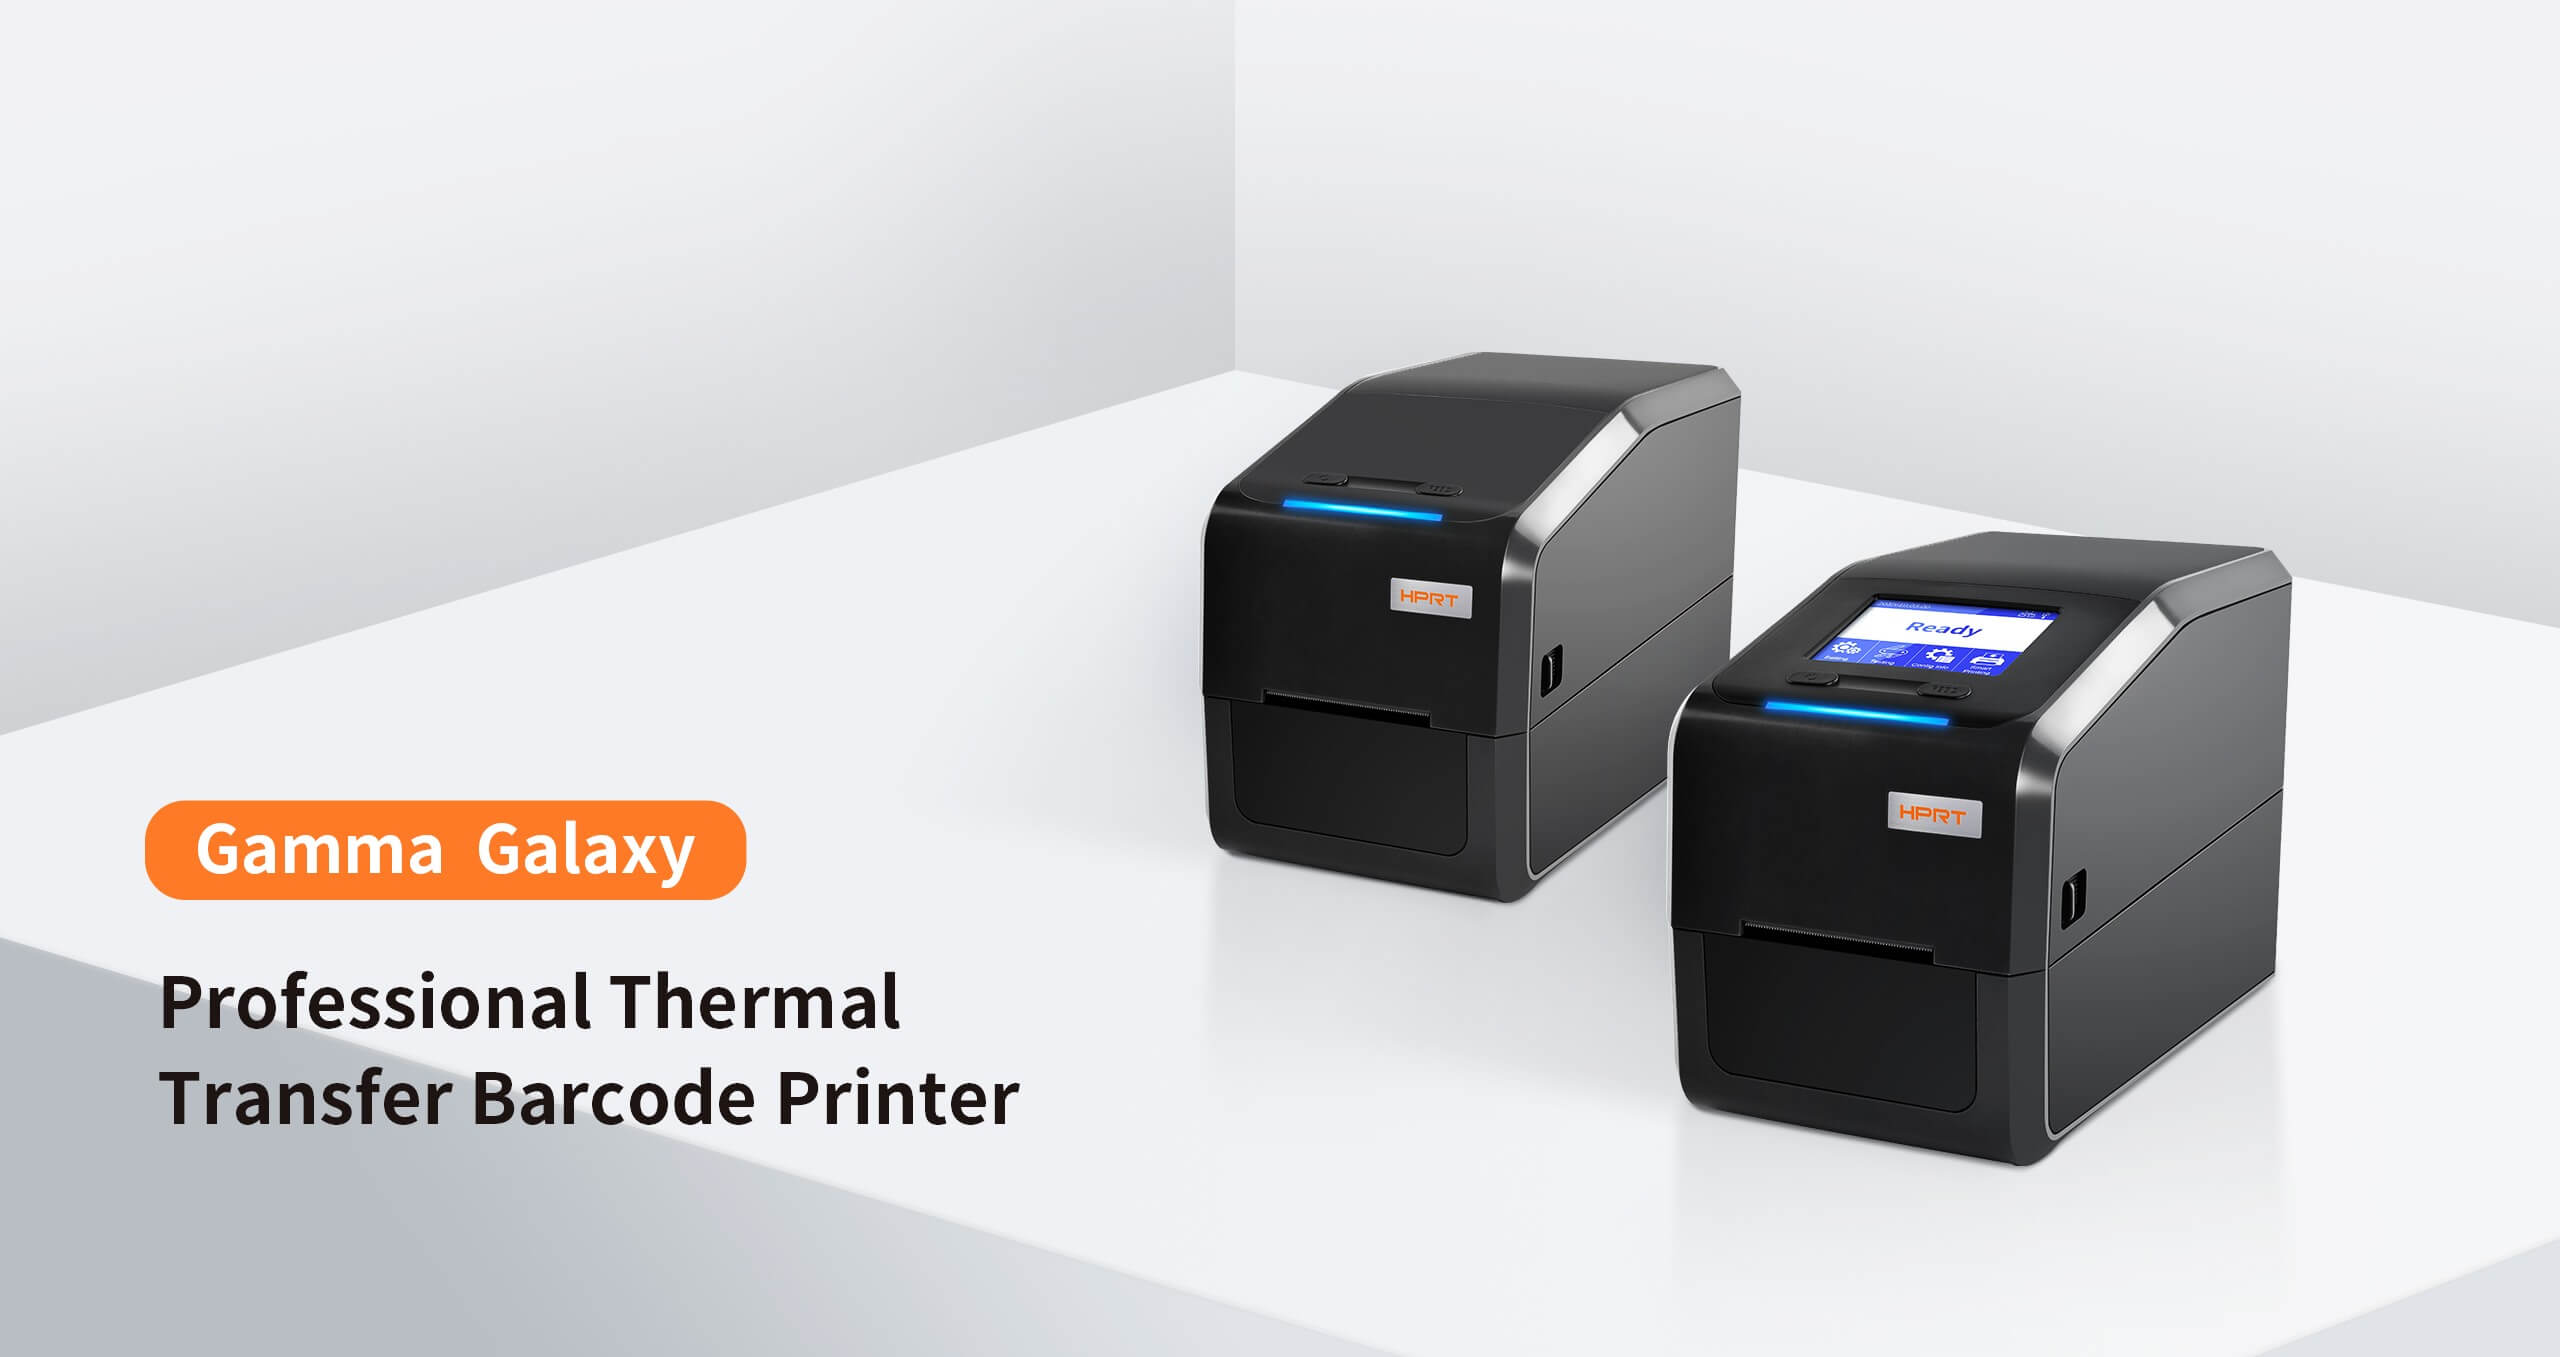 HPRT Professional thermal transfer barcode printer Gamma, Galaxy